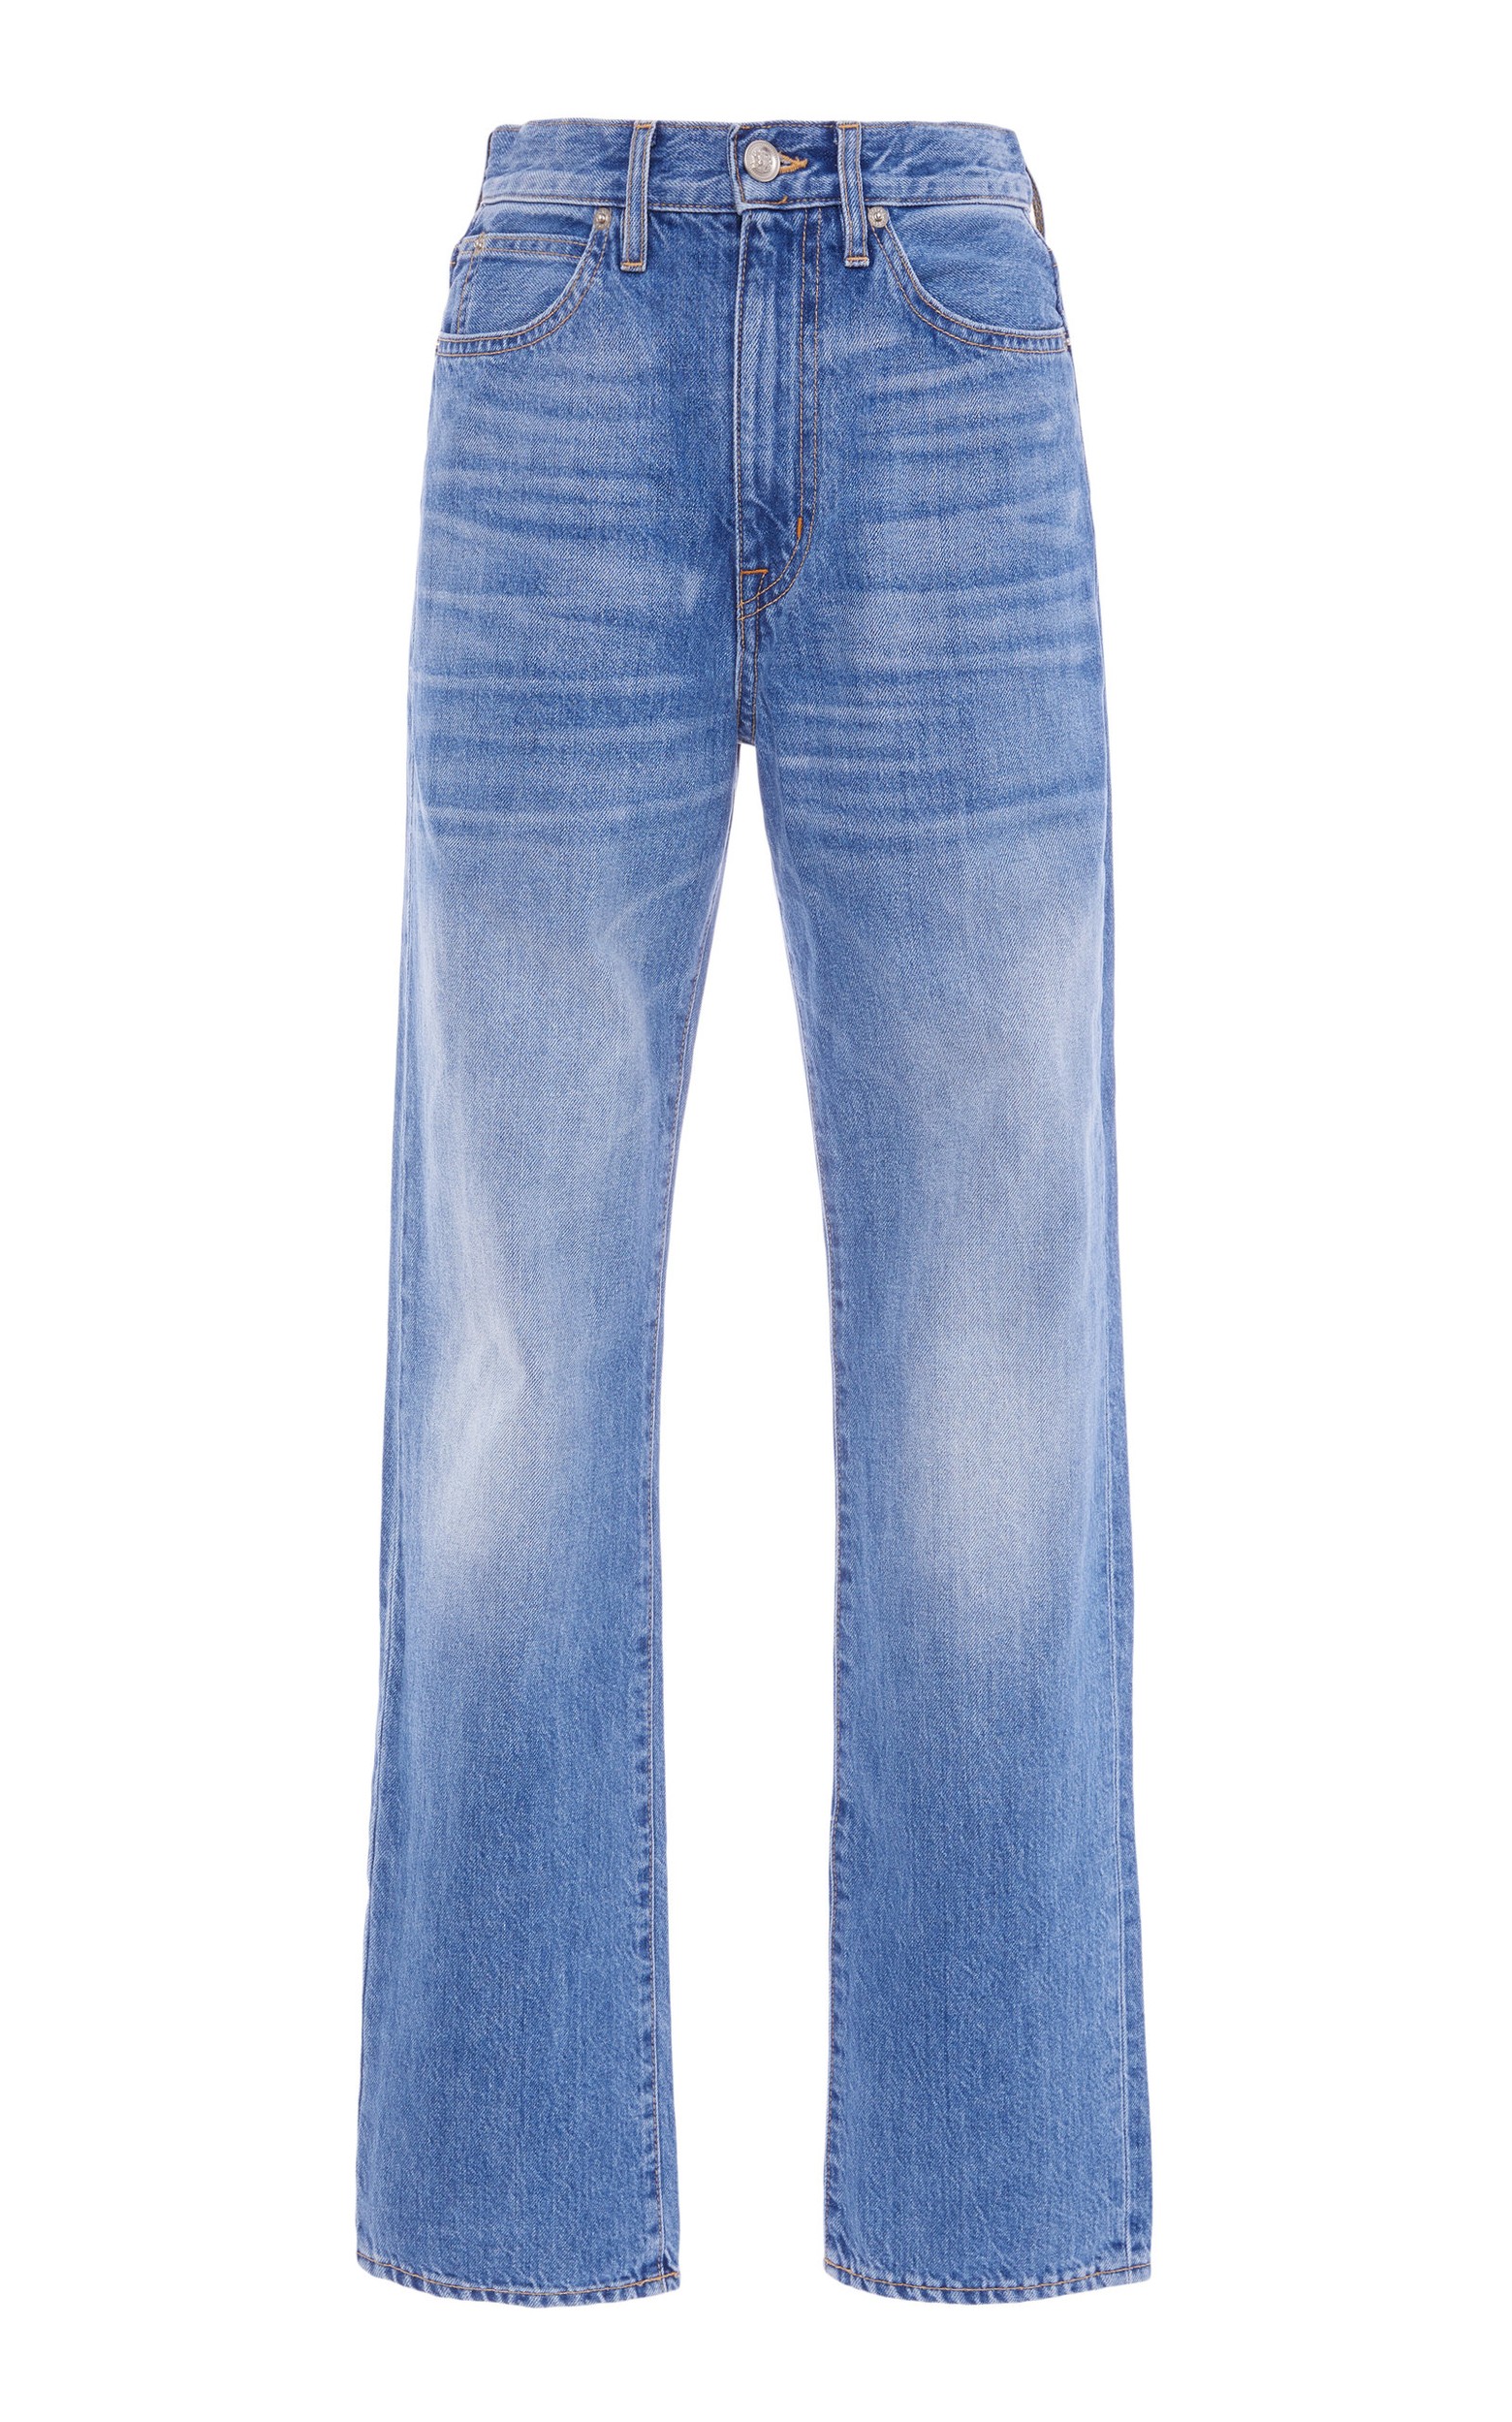 Denim / Pants - Jeans - Basically Beautiful